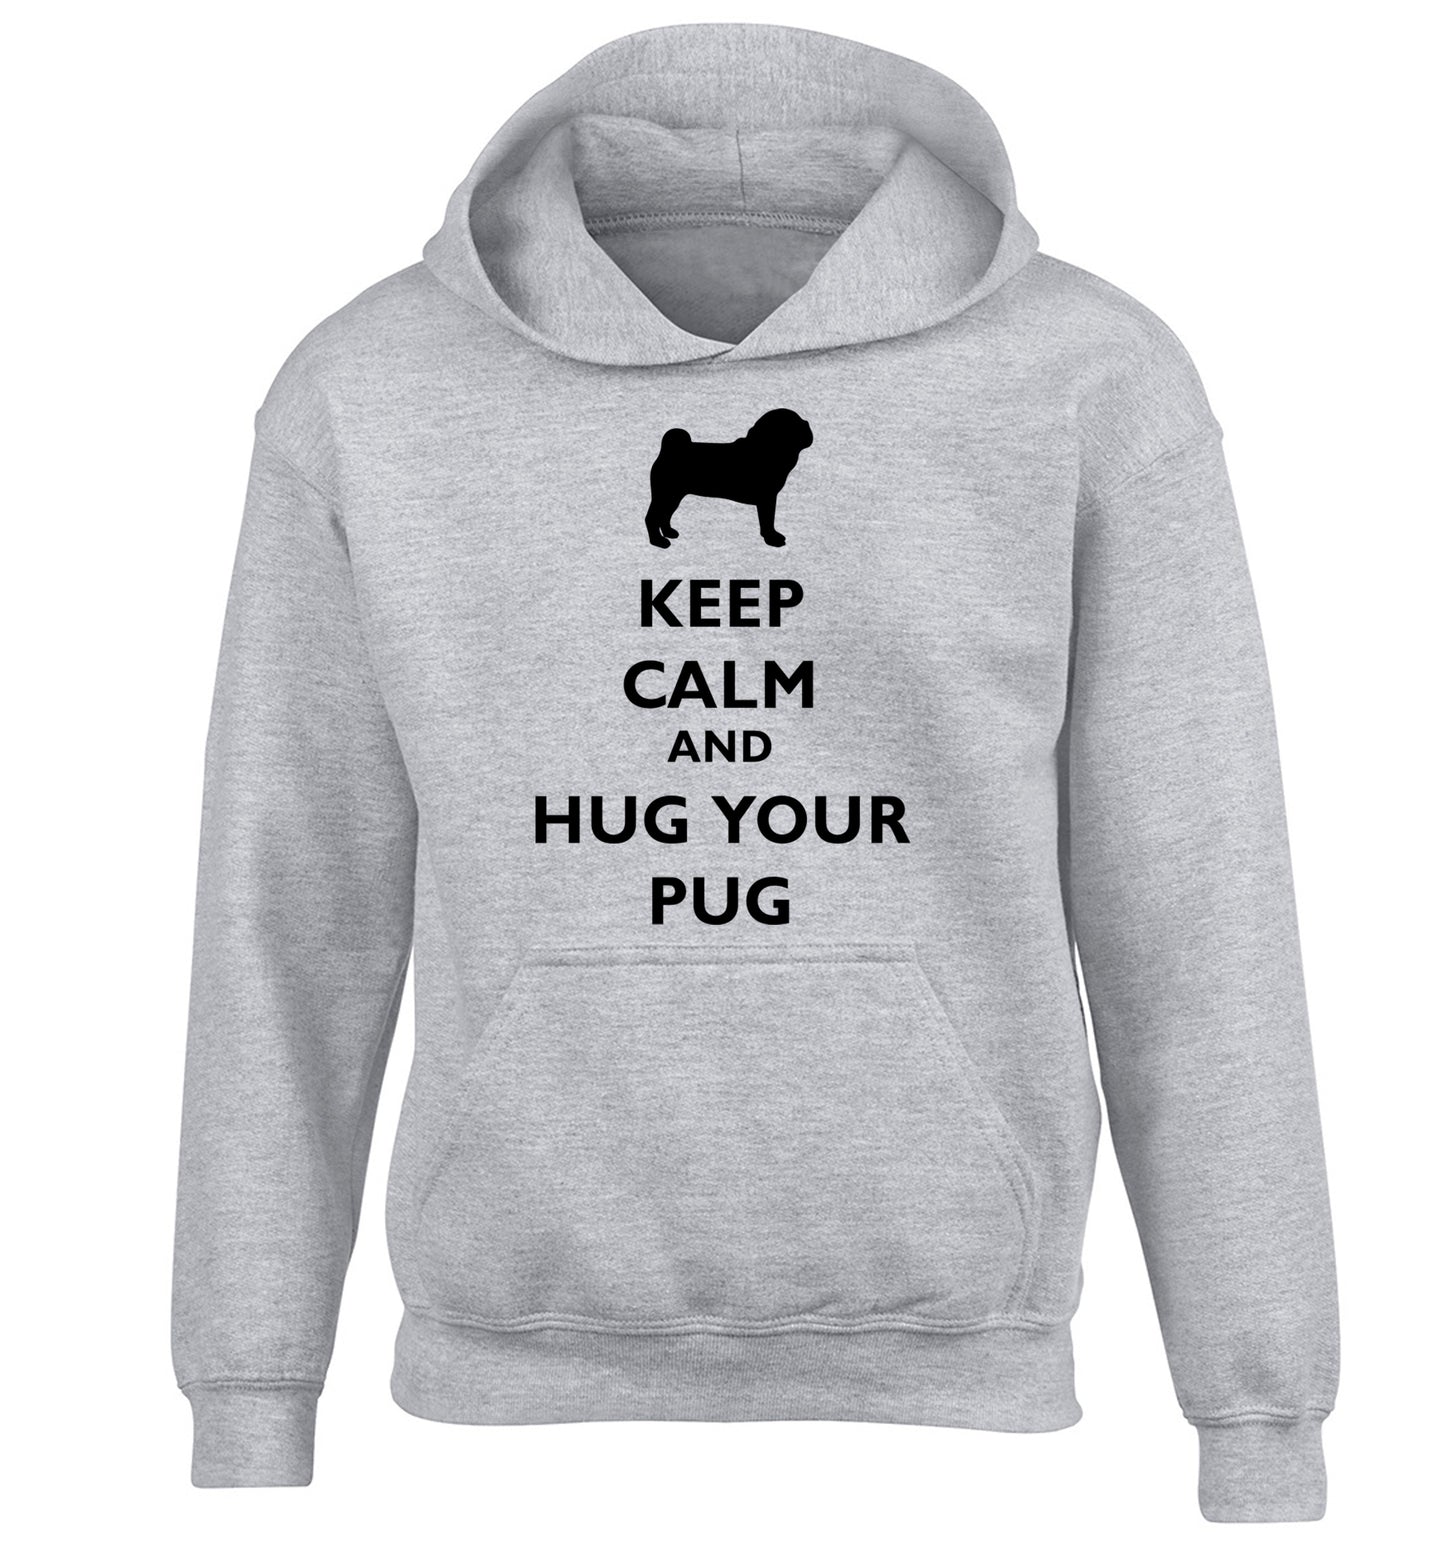 Keep calm and hug your pug children's grey hoodie 12-13 Years